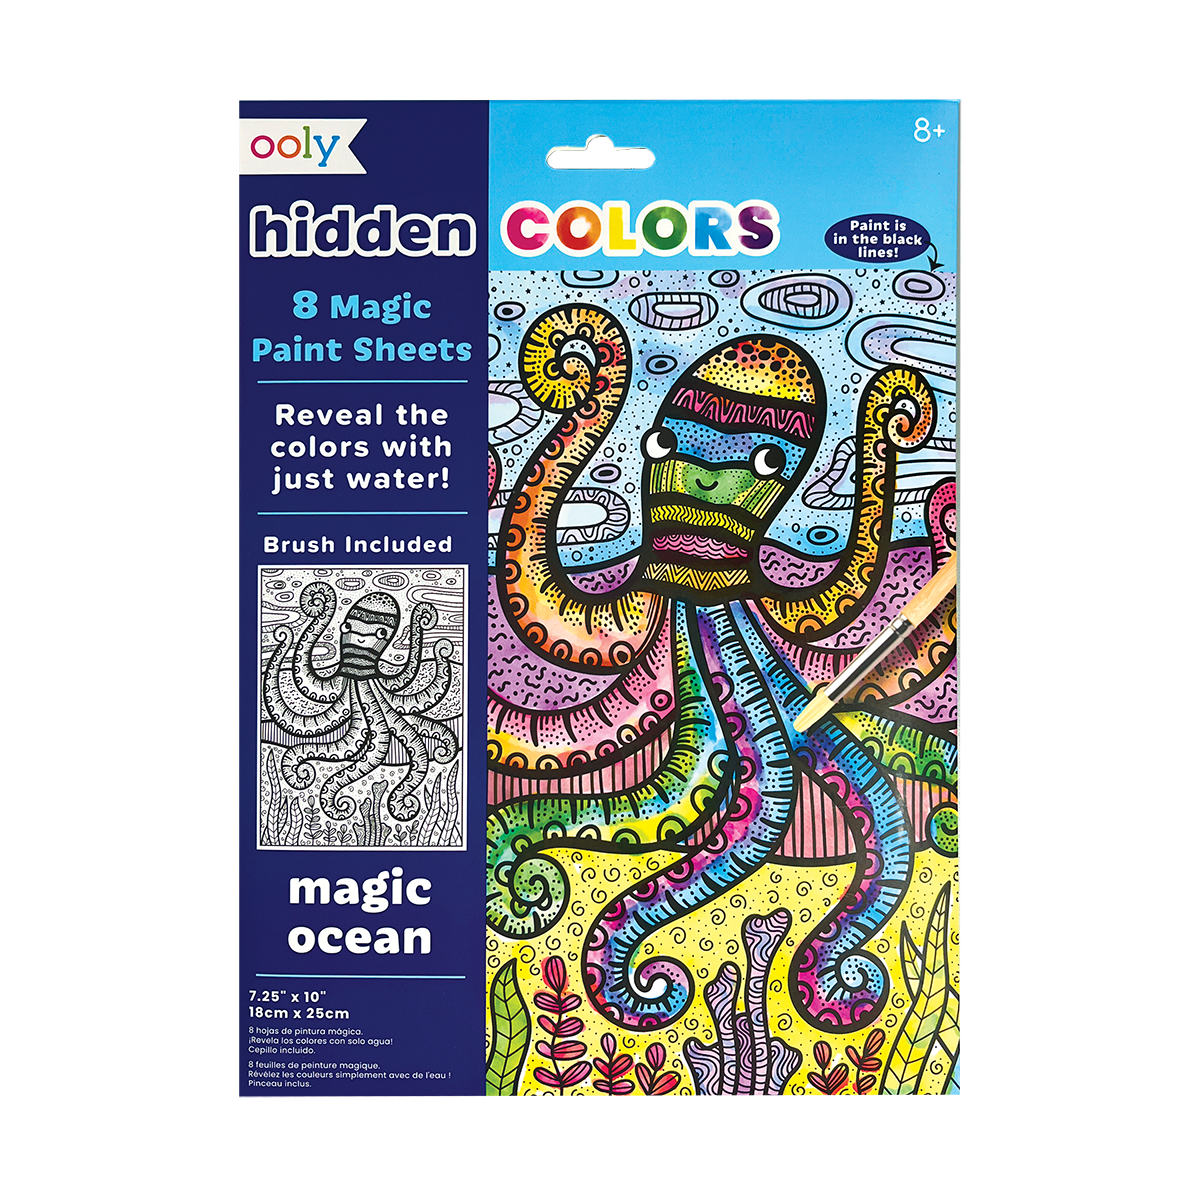 OOLY Hidden Colors Magic Paint Sheets - Magic Ocean in packaging